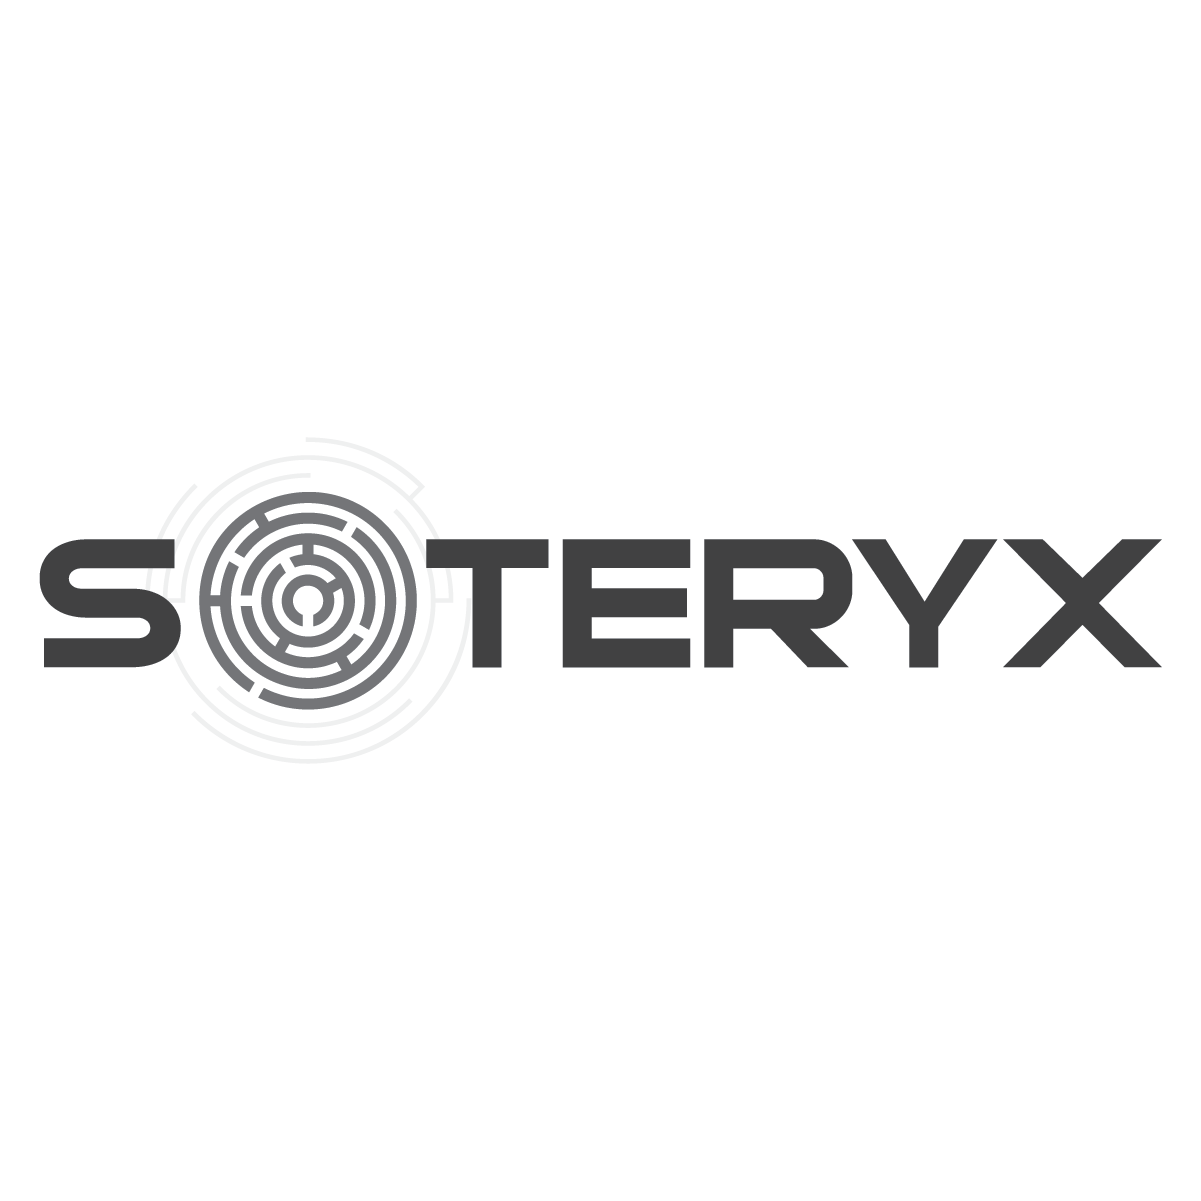 Soteryx